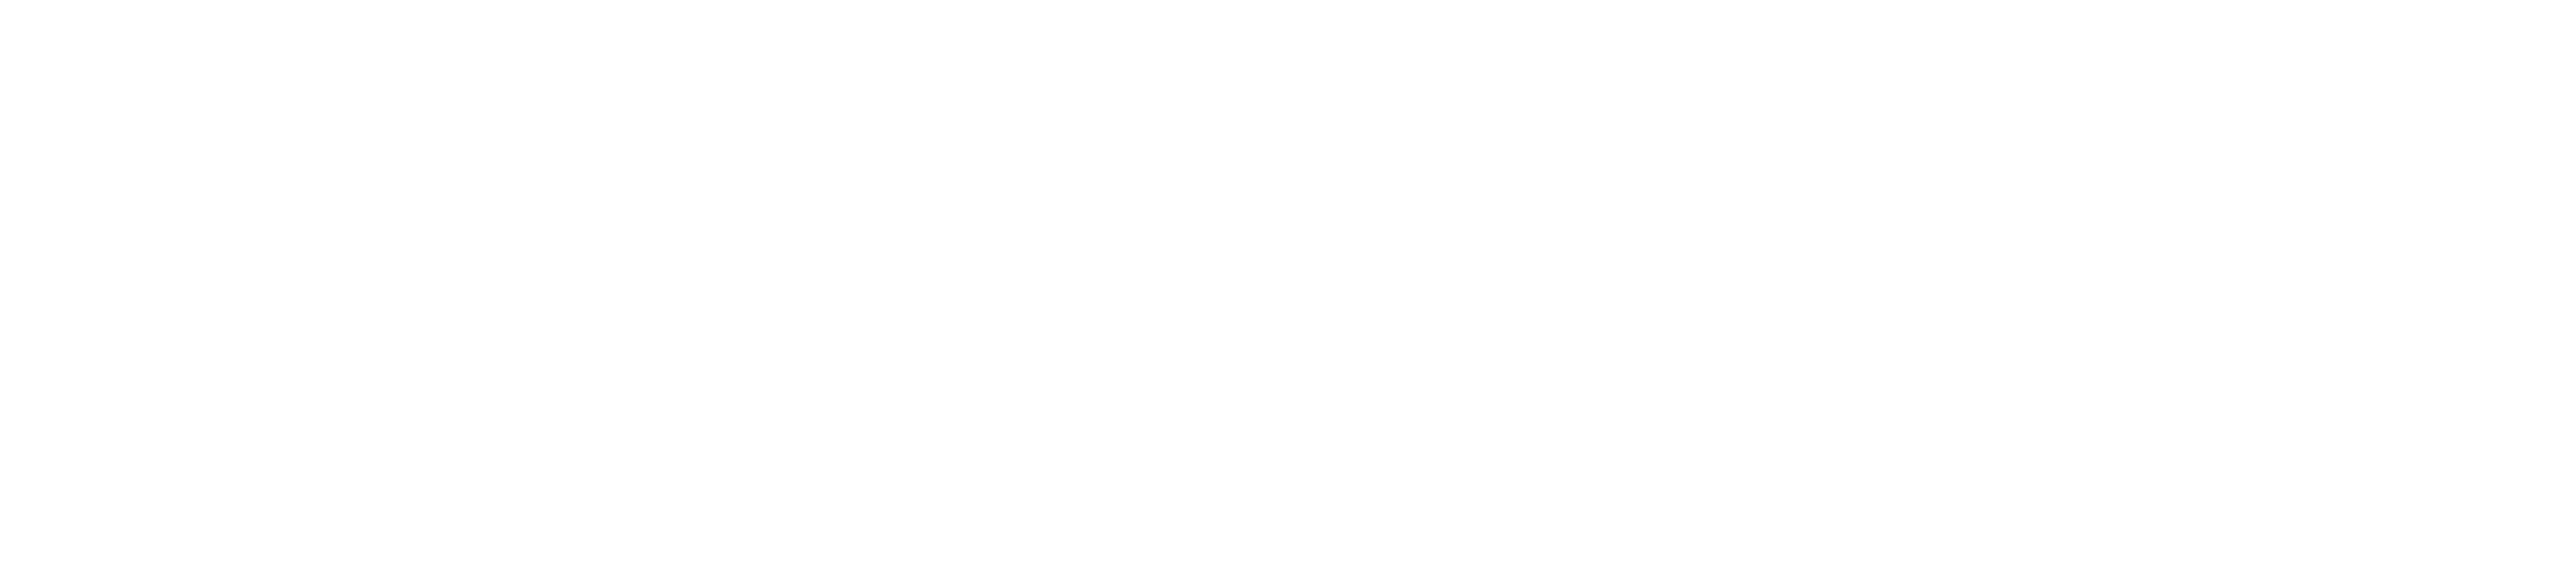 Prideland Acres